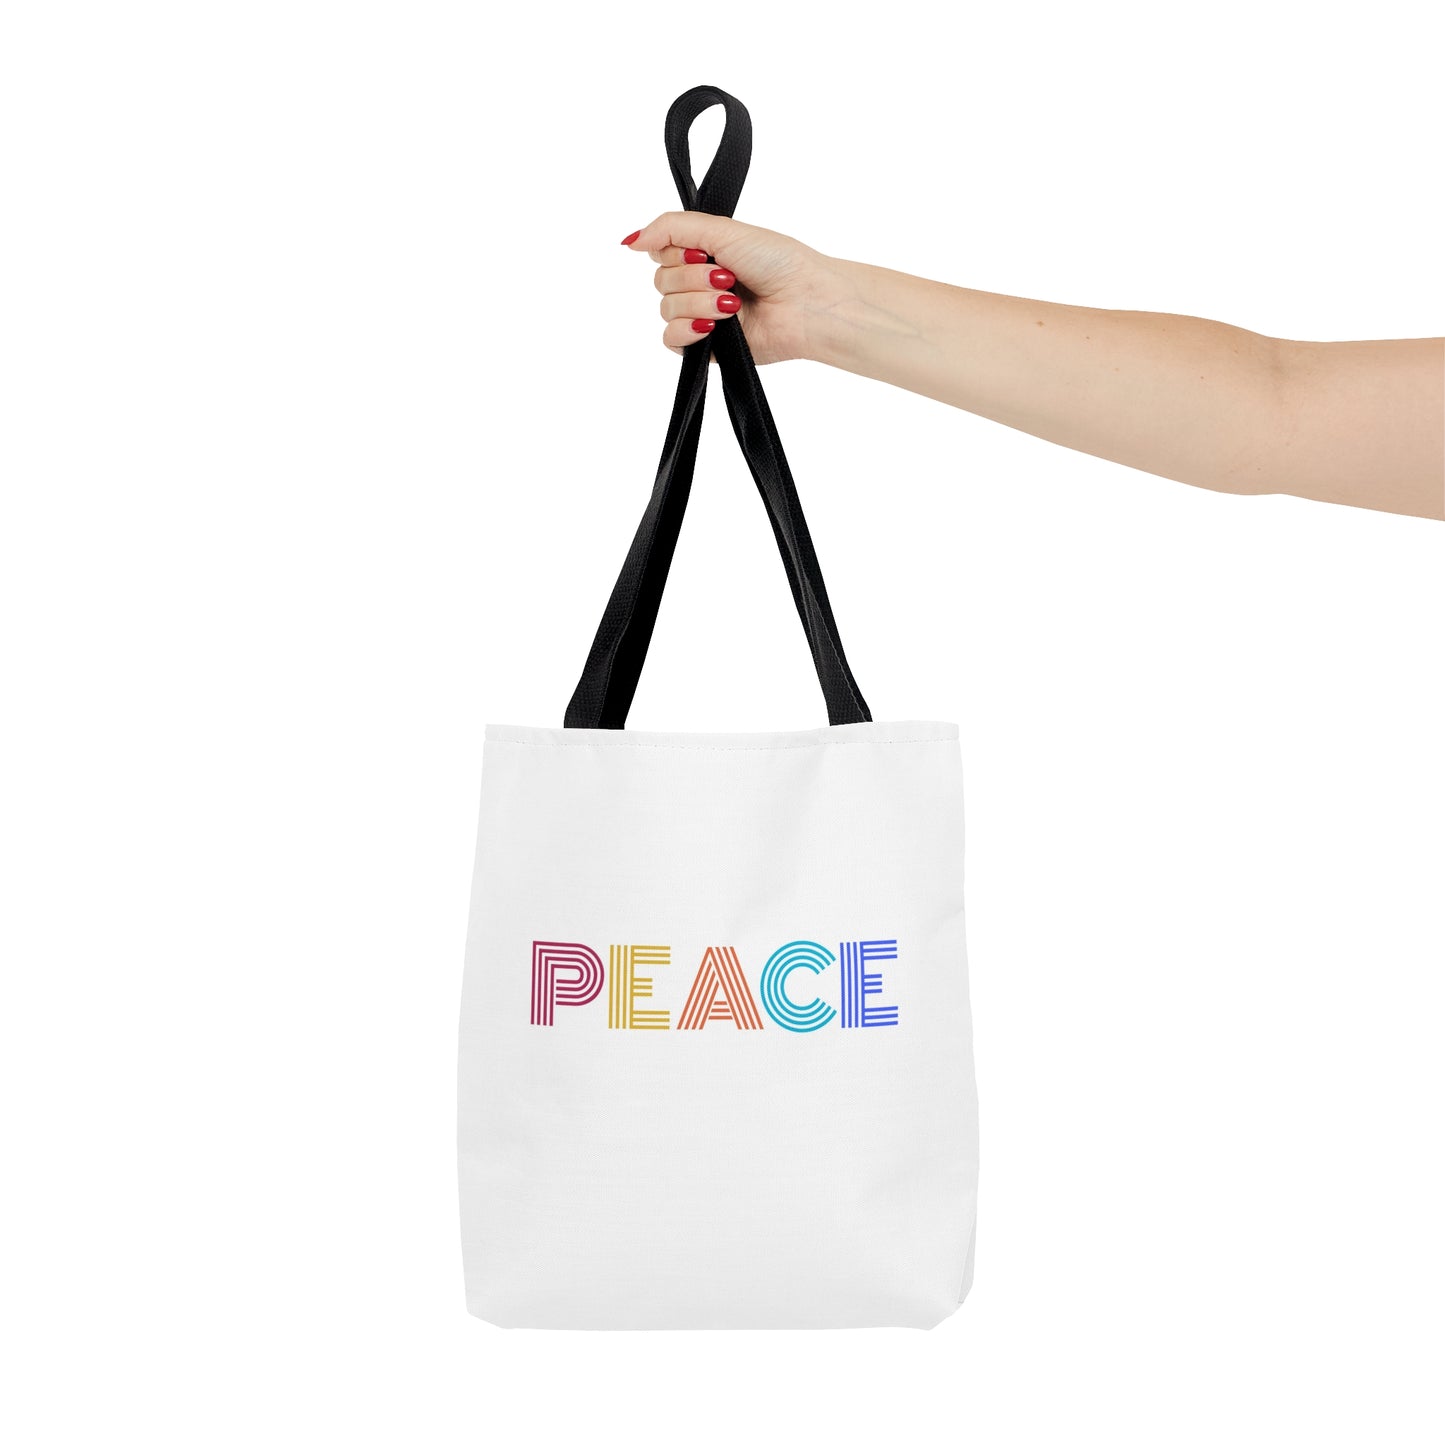 PEACE Tote Bag, White